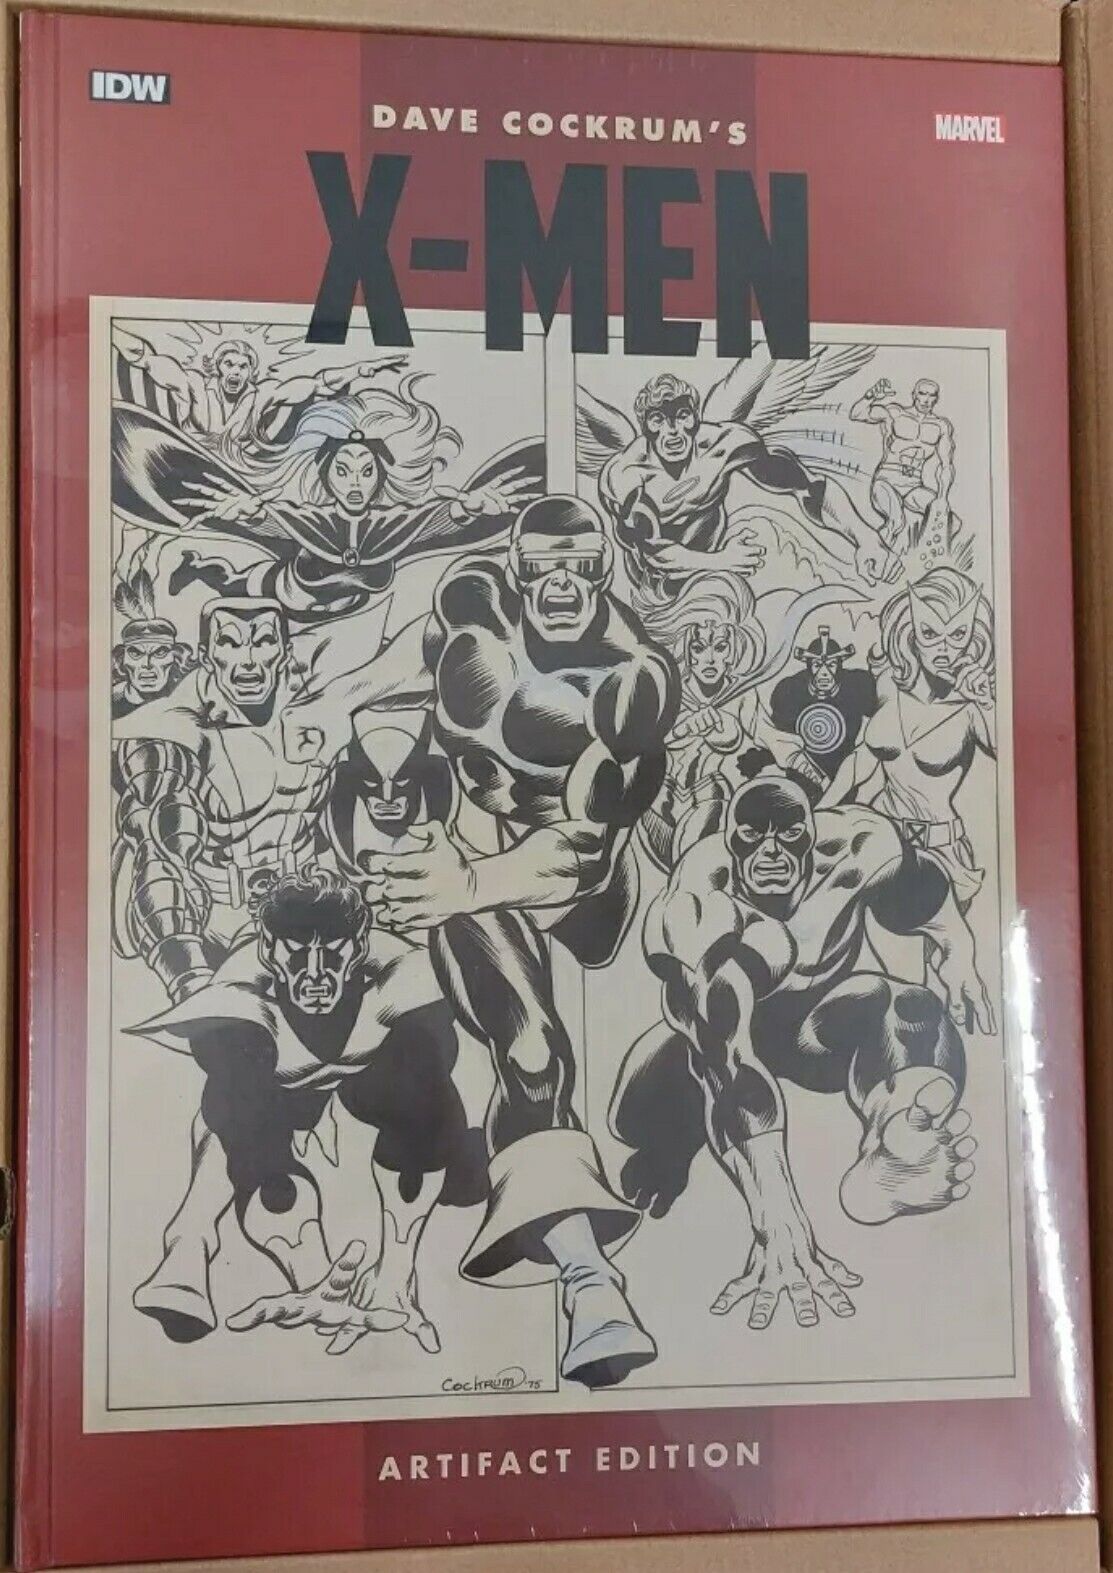 Dave Cockrum X-Men Artifact Artist Edition HC New Sealed w/ Carton Marvel IDW 